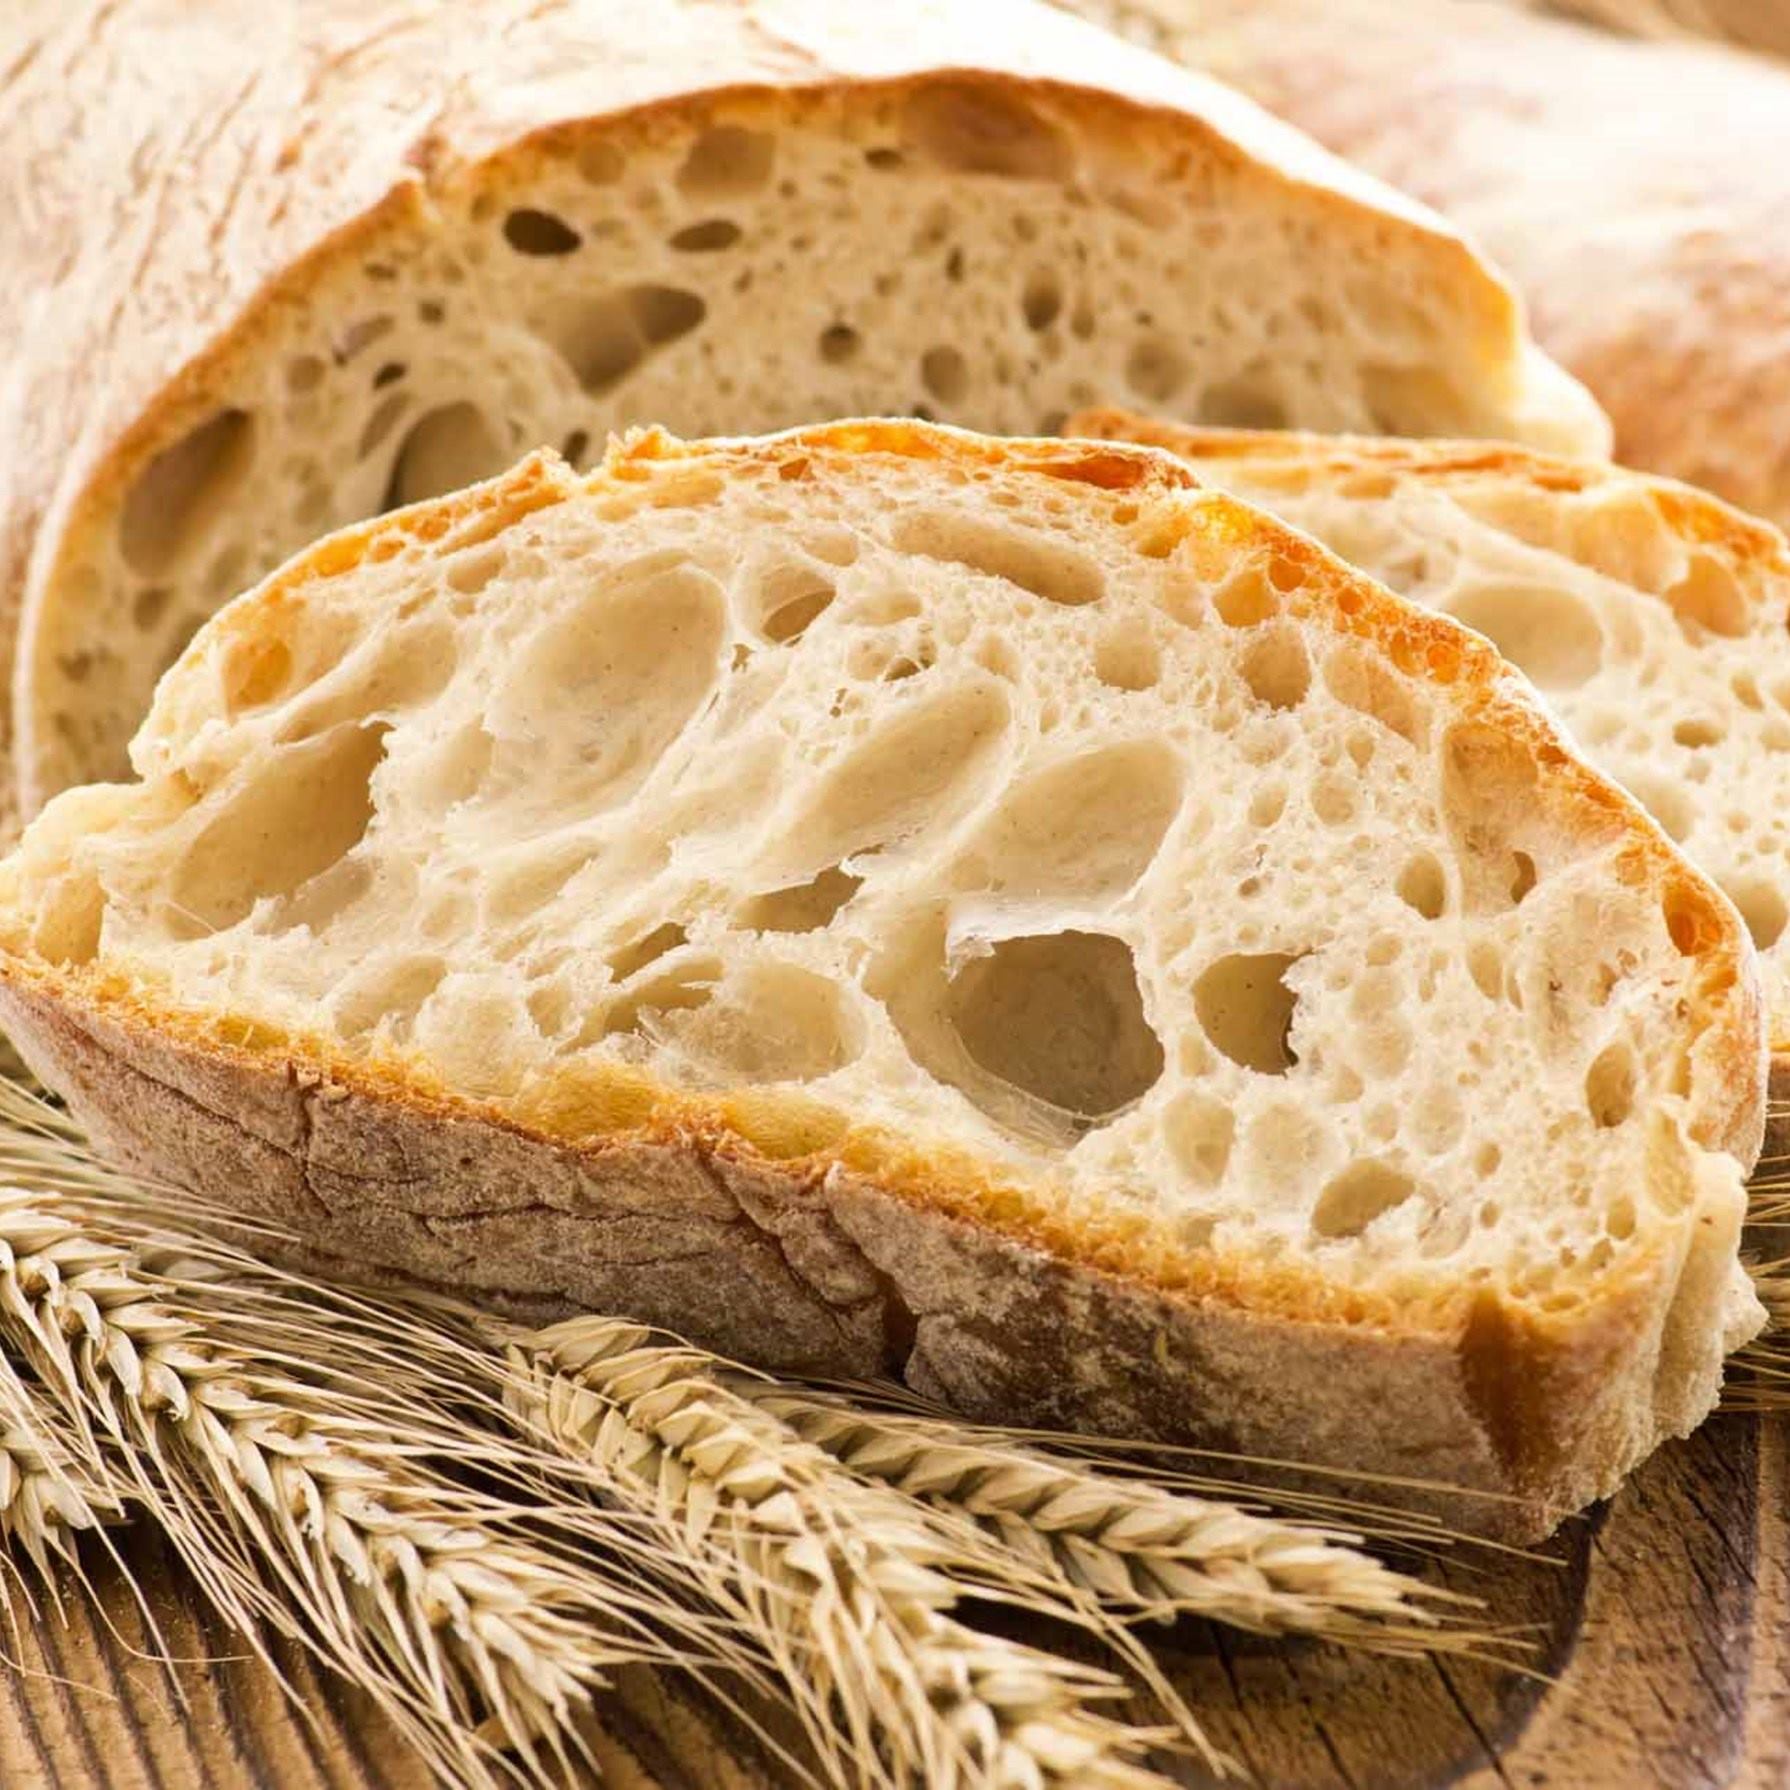 Pan en tajadas